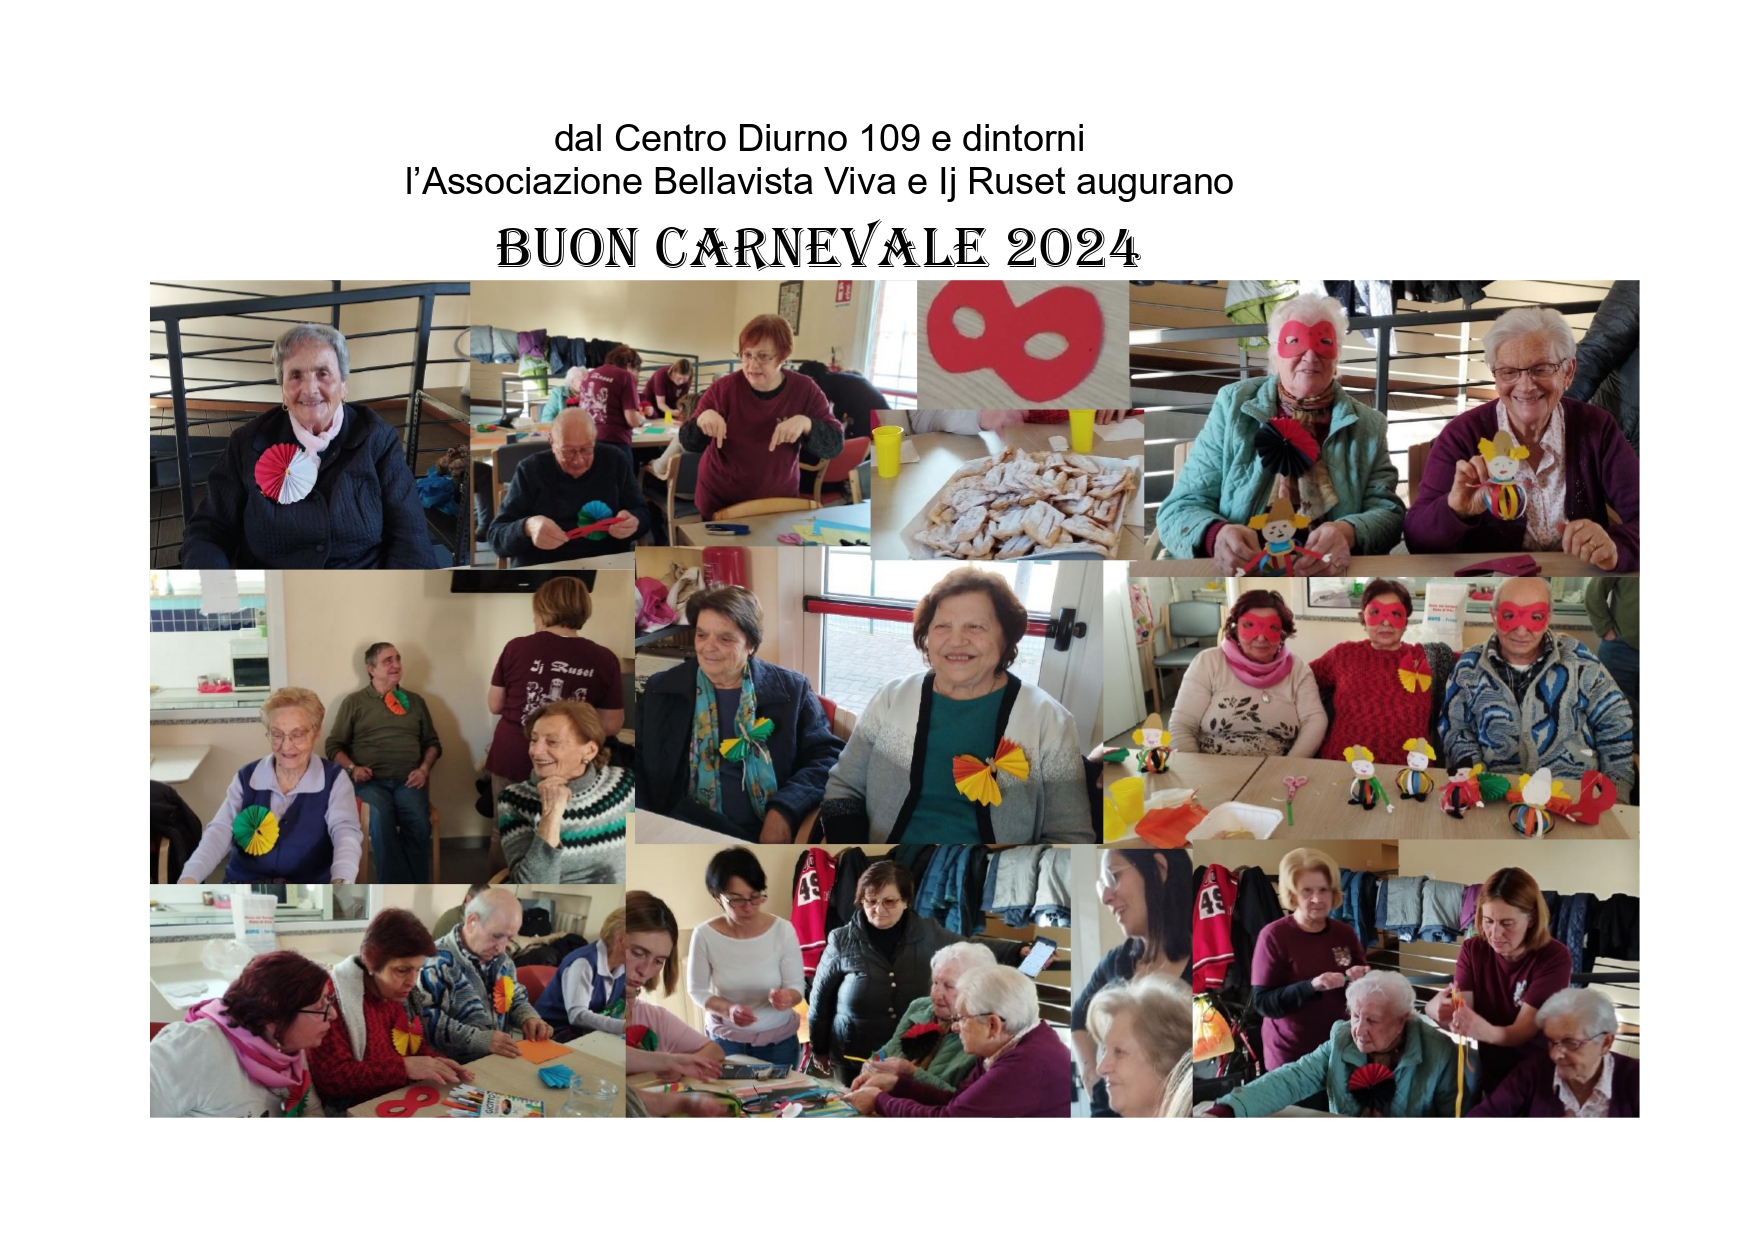 Buon Carnevale 2024 page 0001